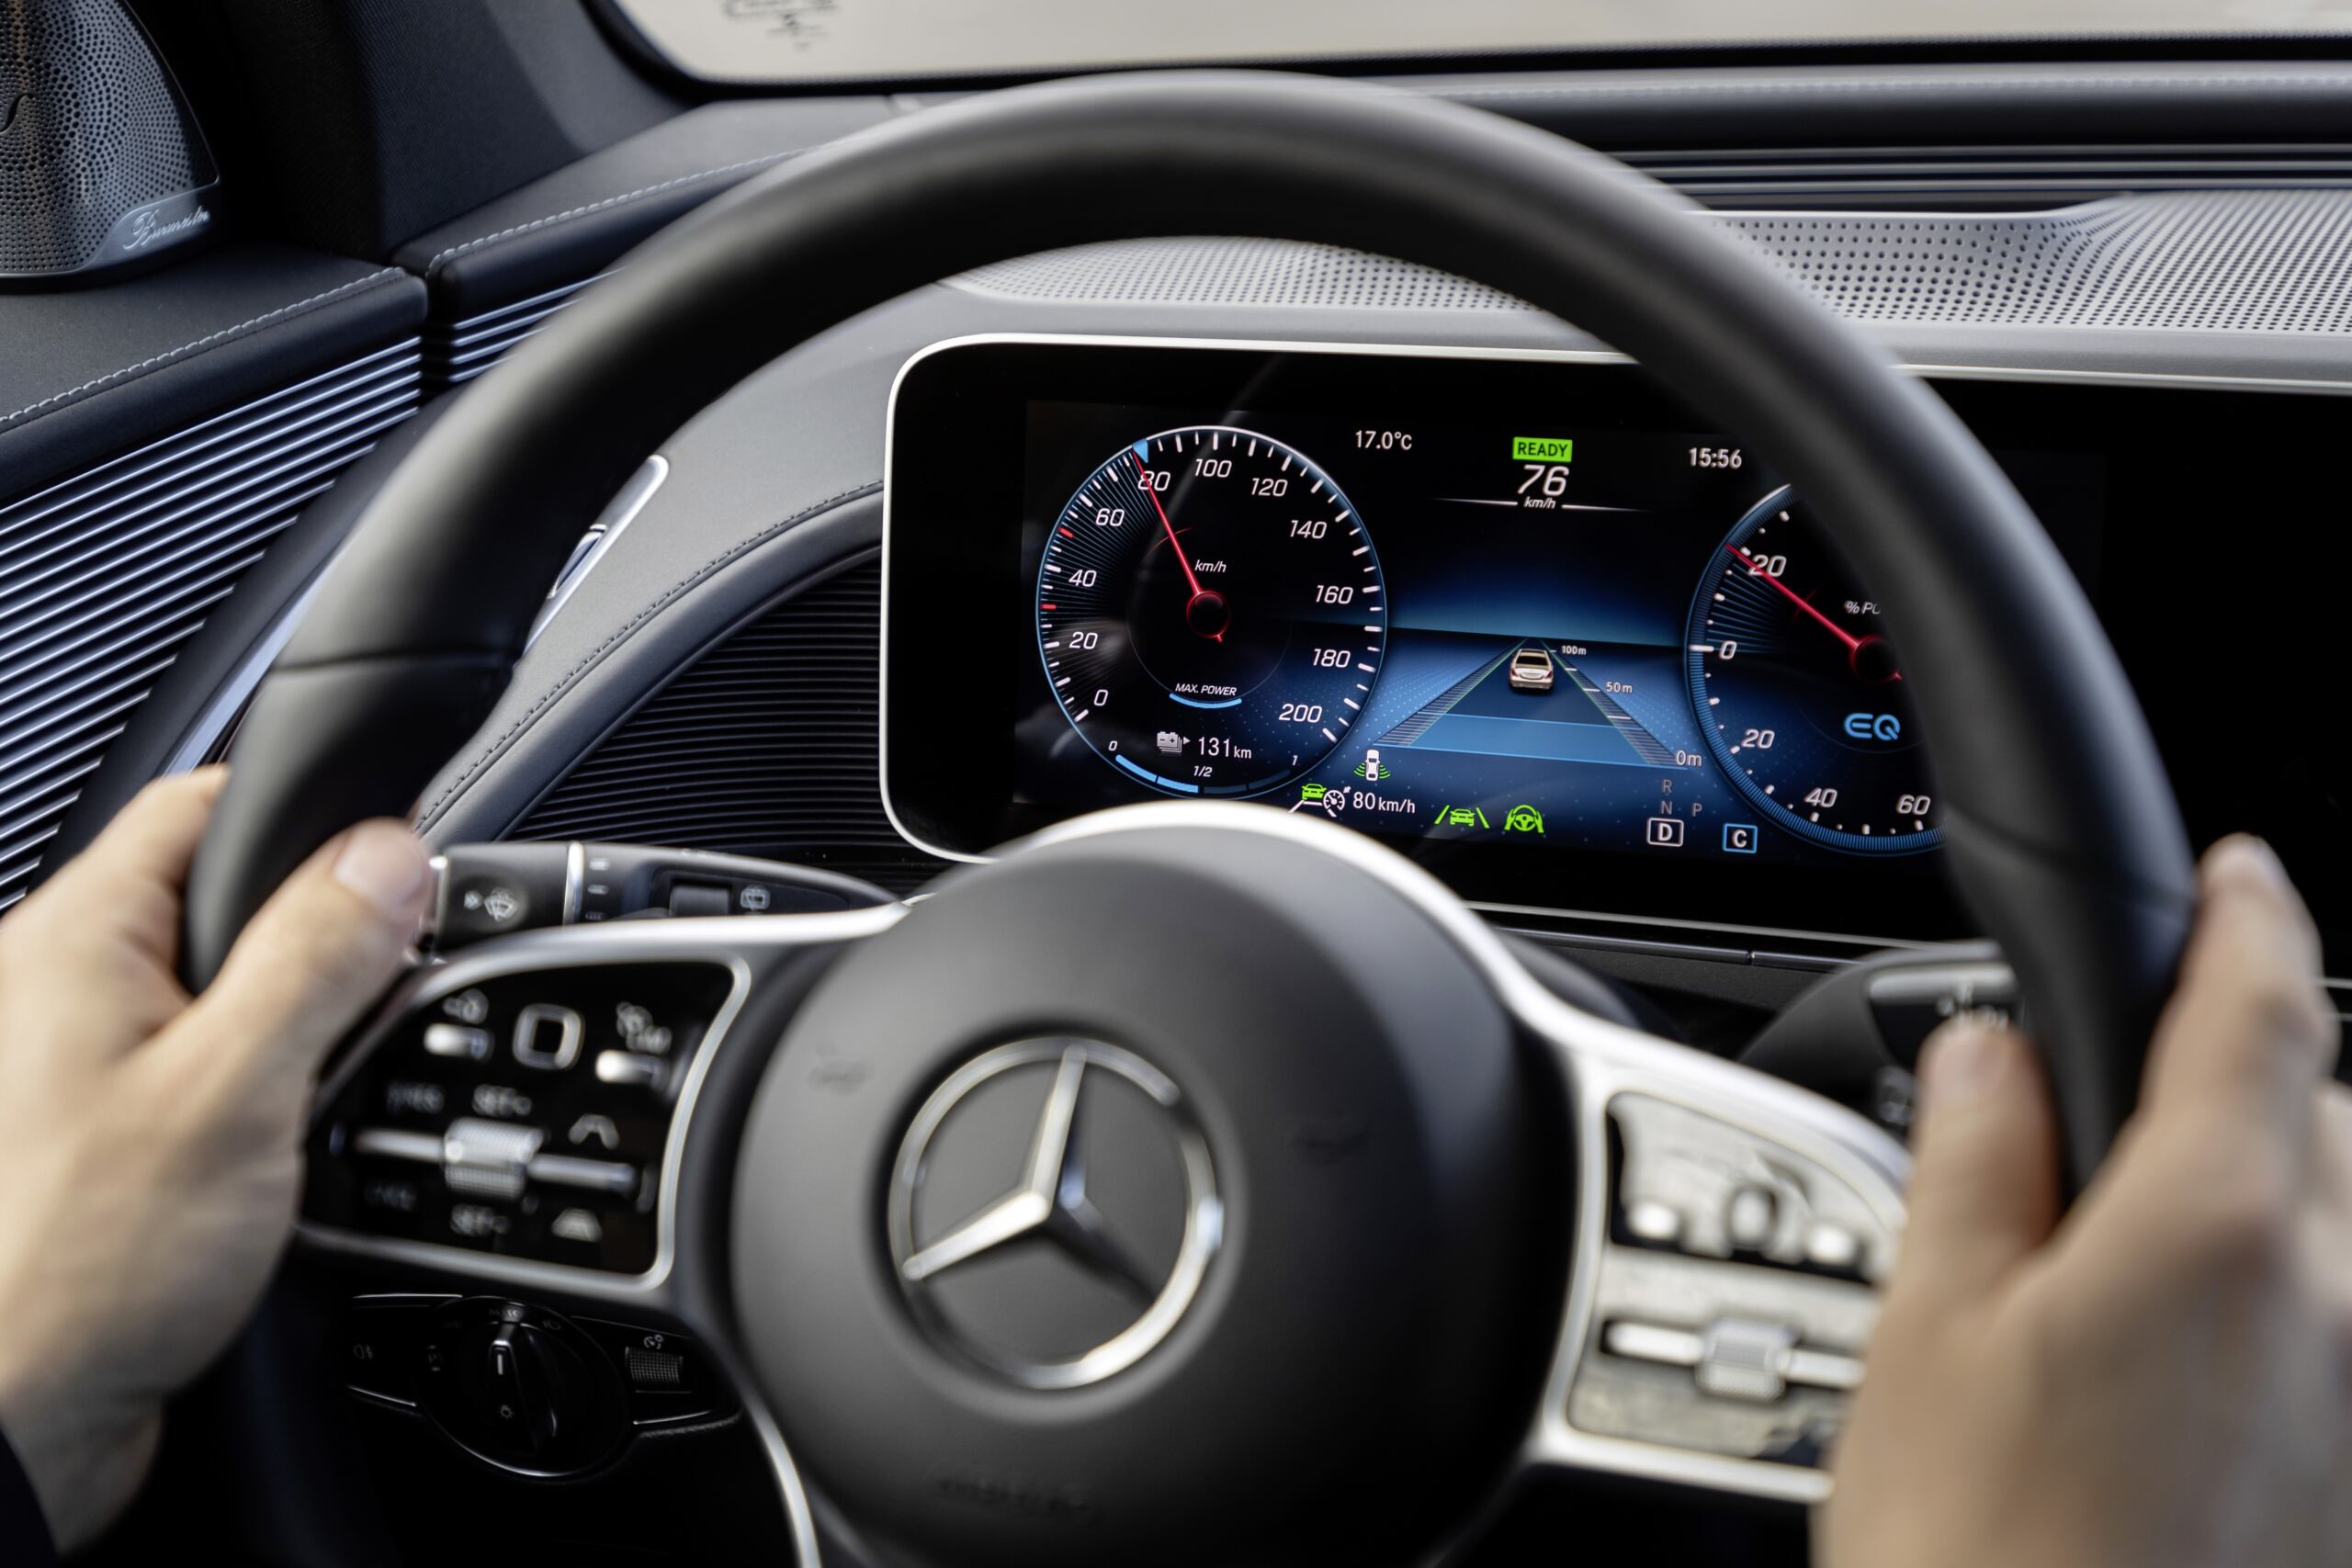 Mercedes intelligenza artificiale